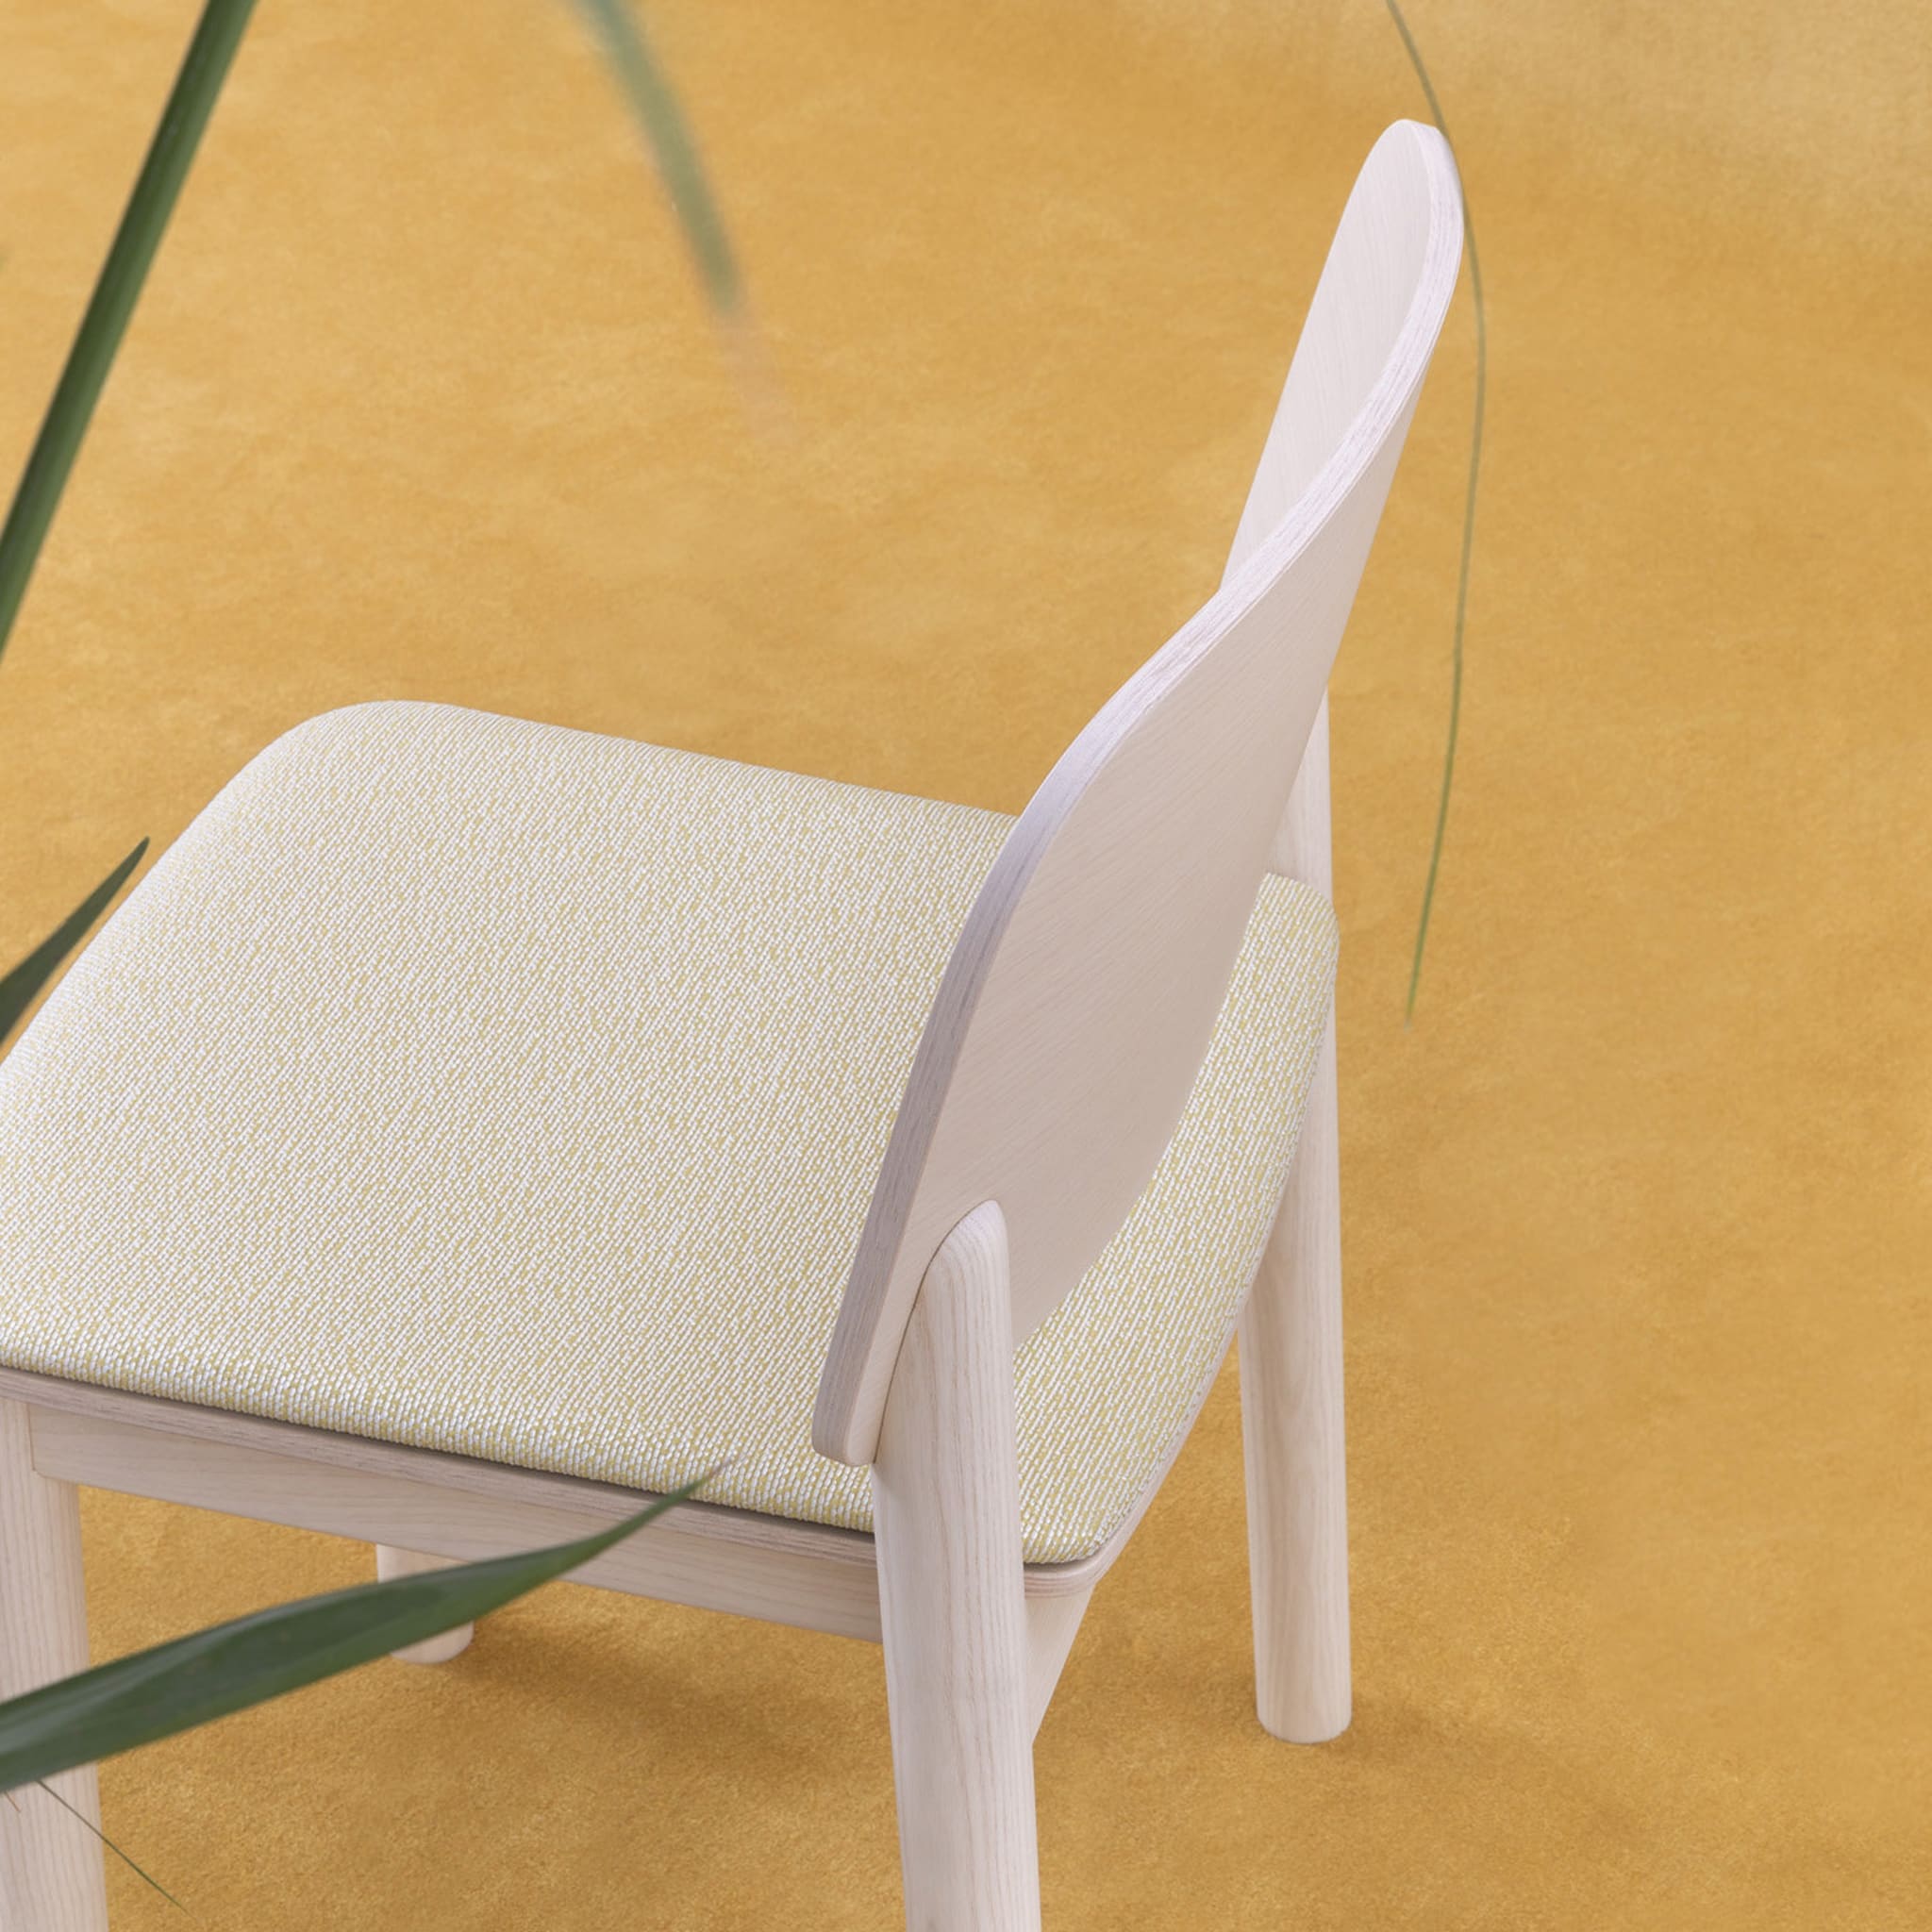 White Chair by Harri Koskinen - Alternative view 1